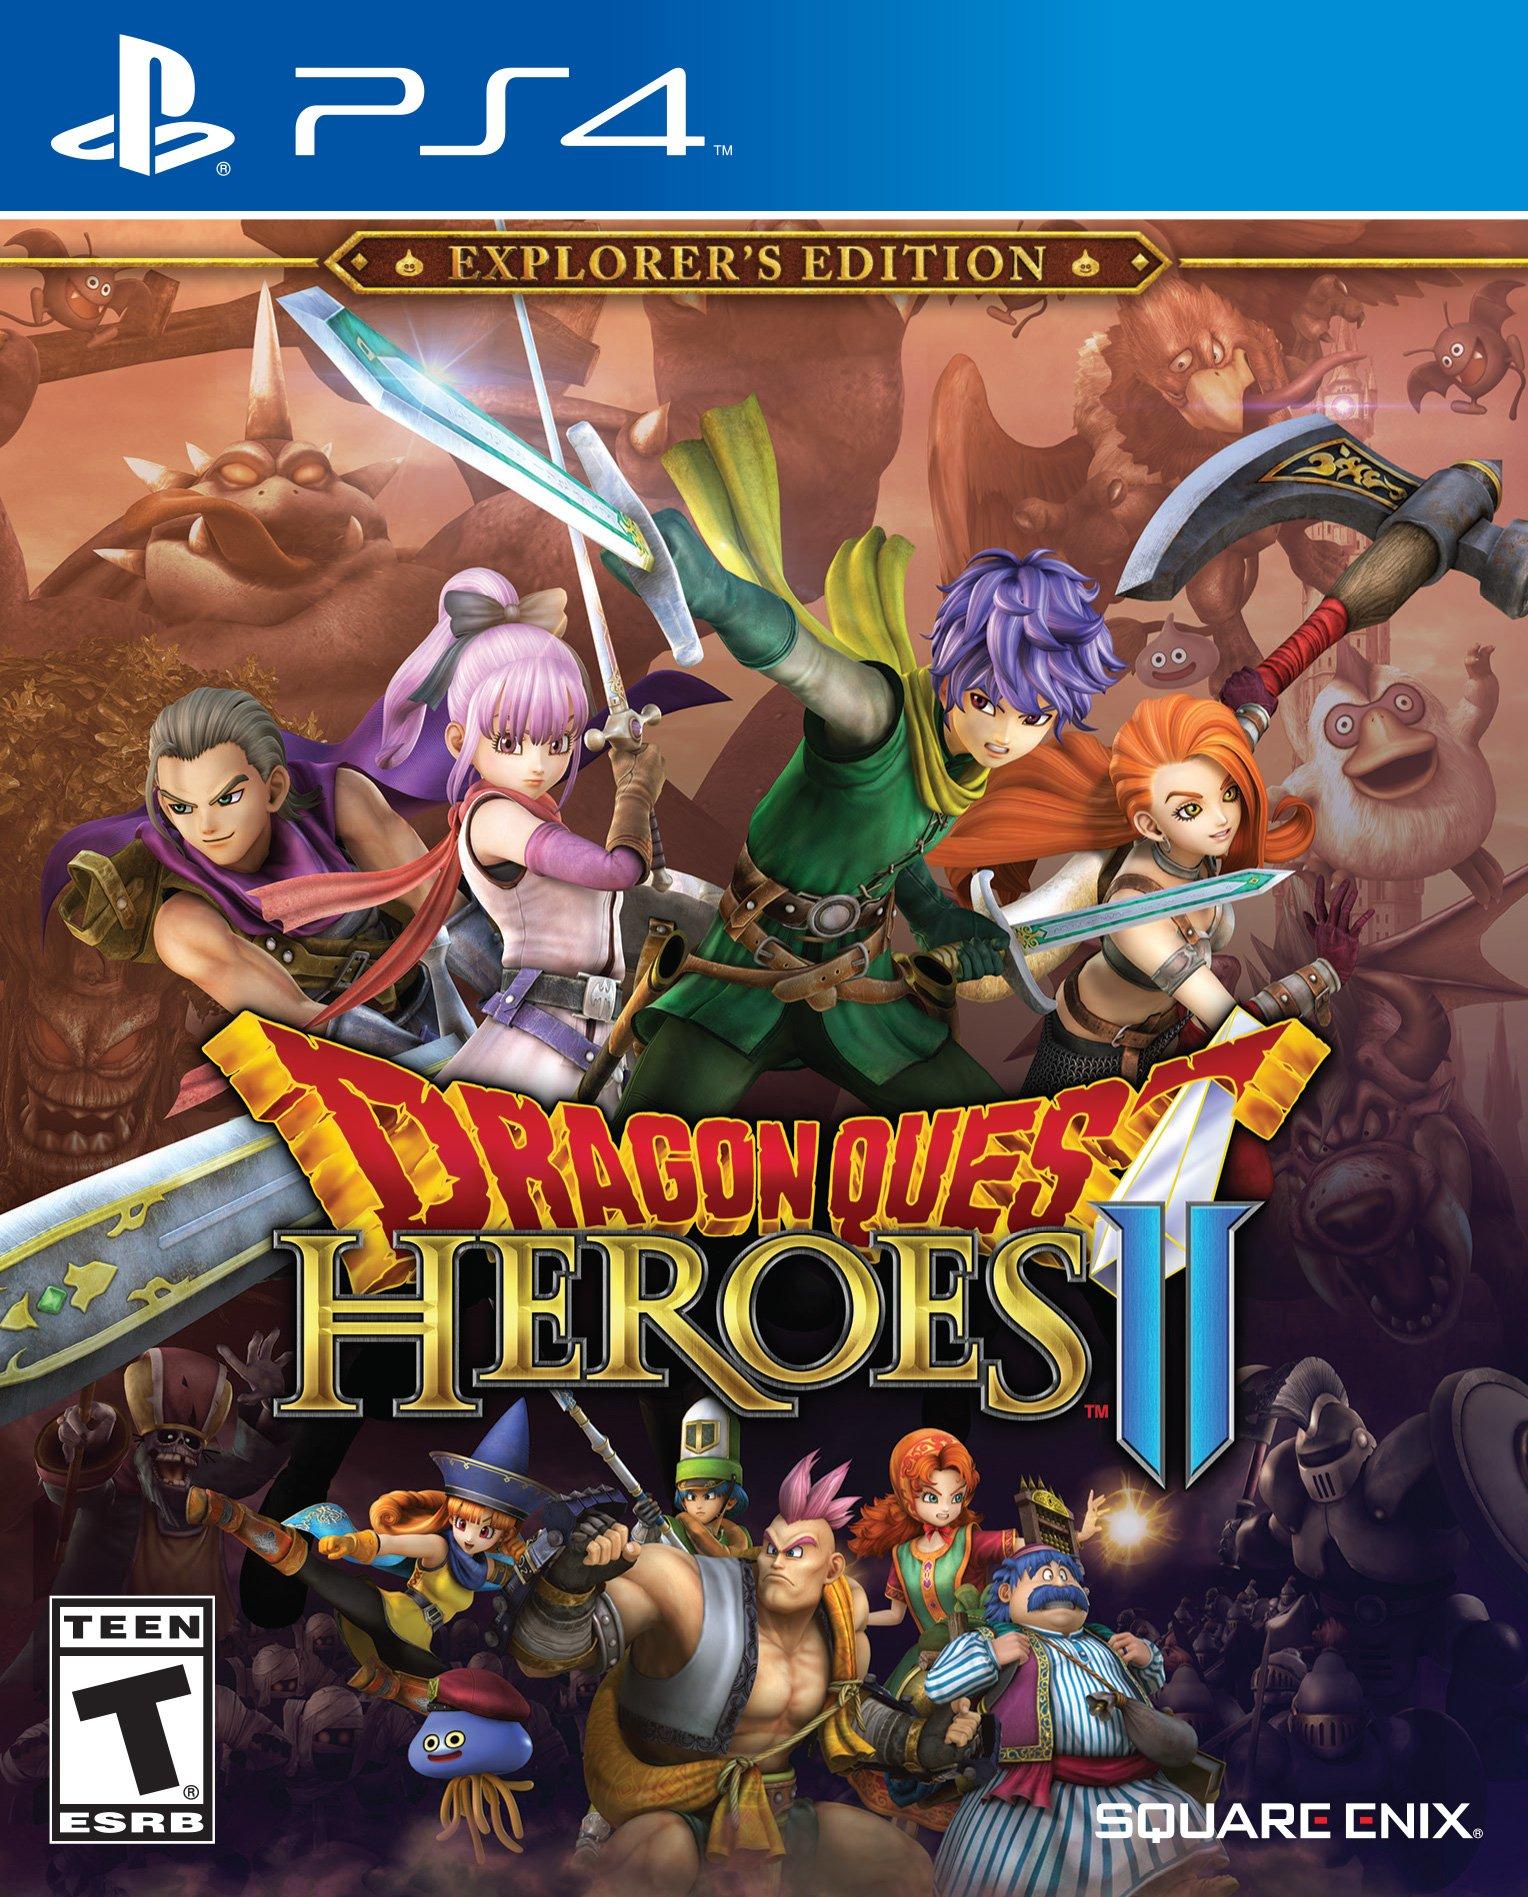 Quest Heroes II - PlayStation 4 | PlayStation 4 | GameStop